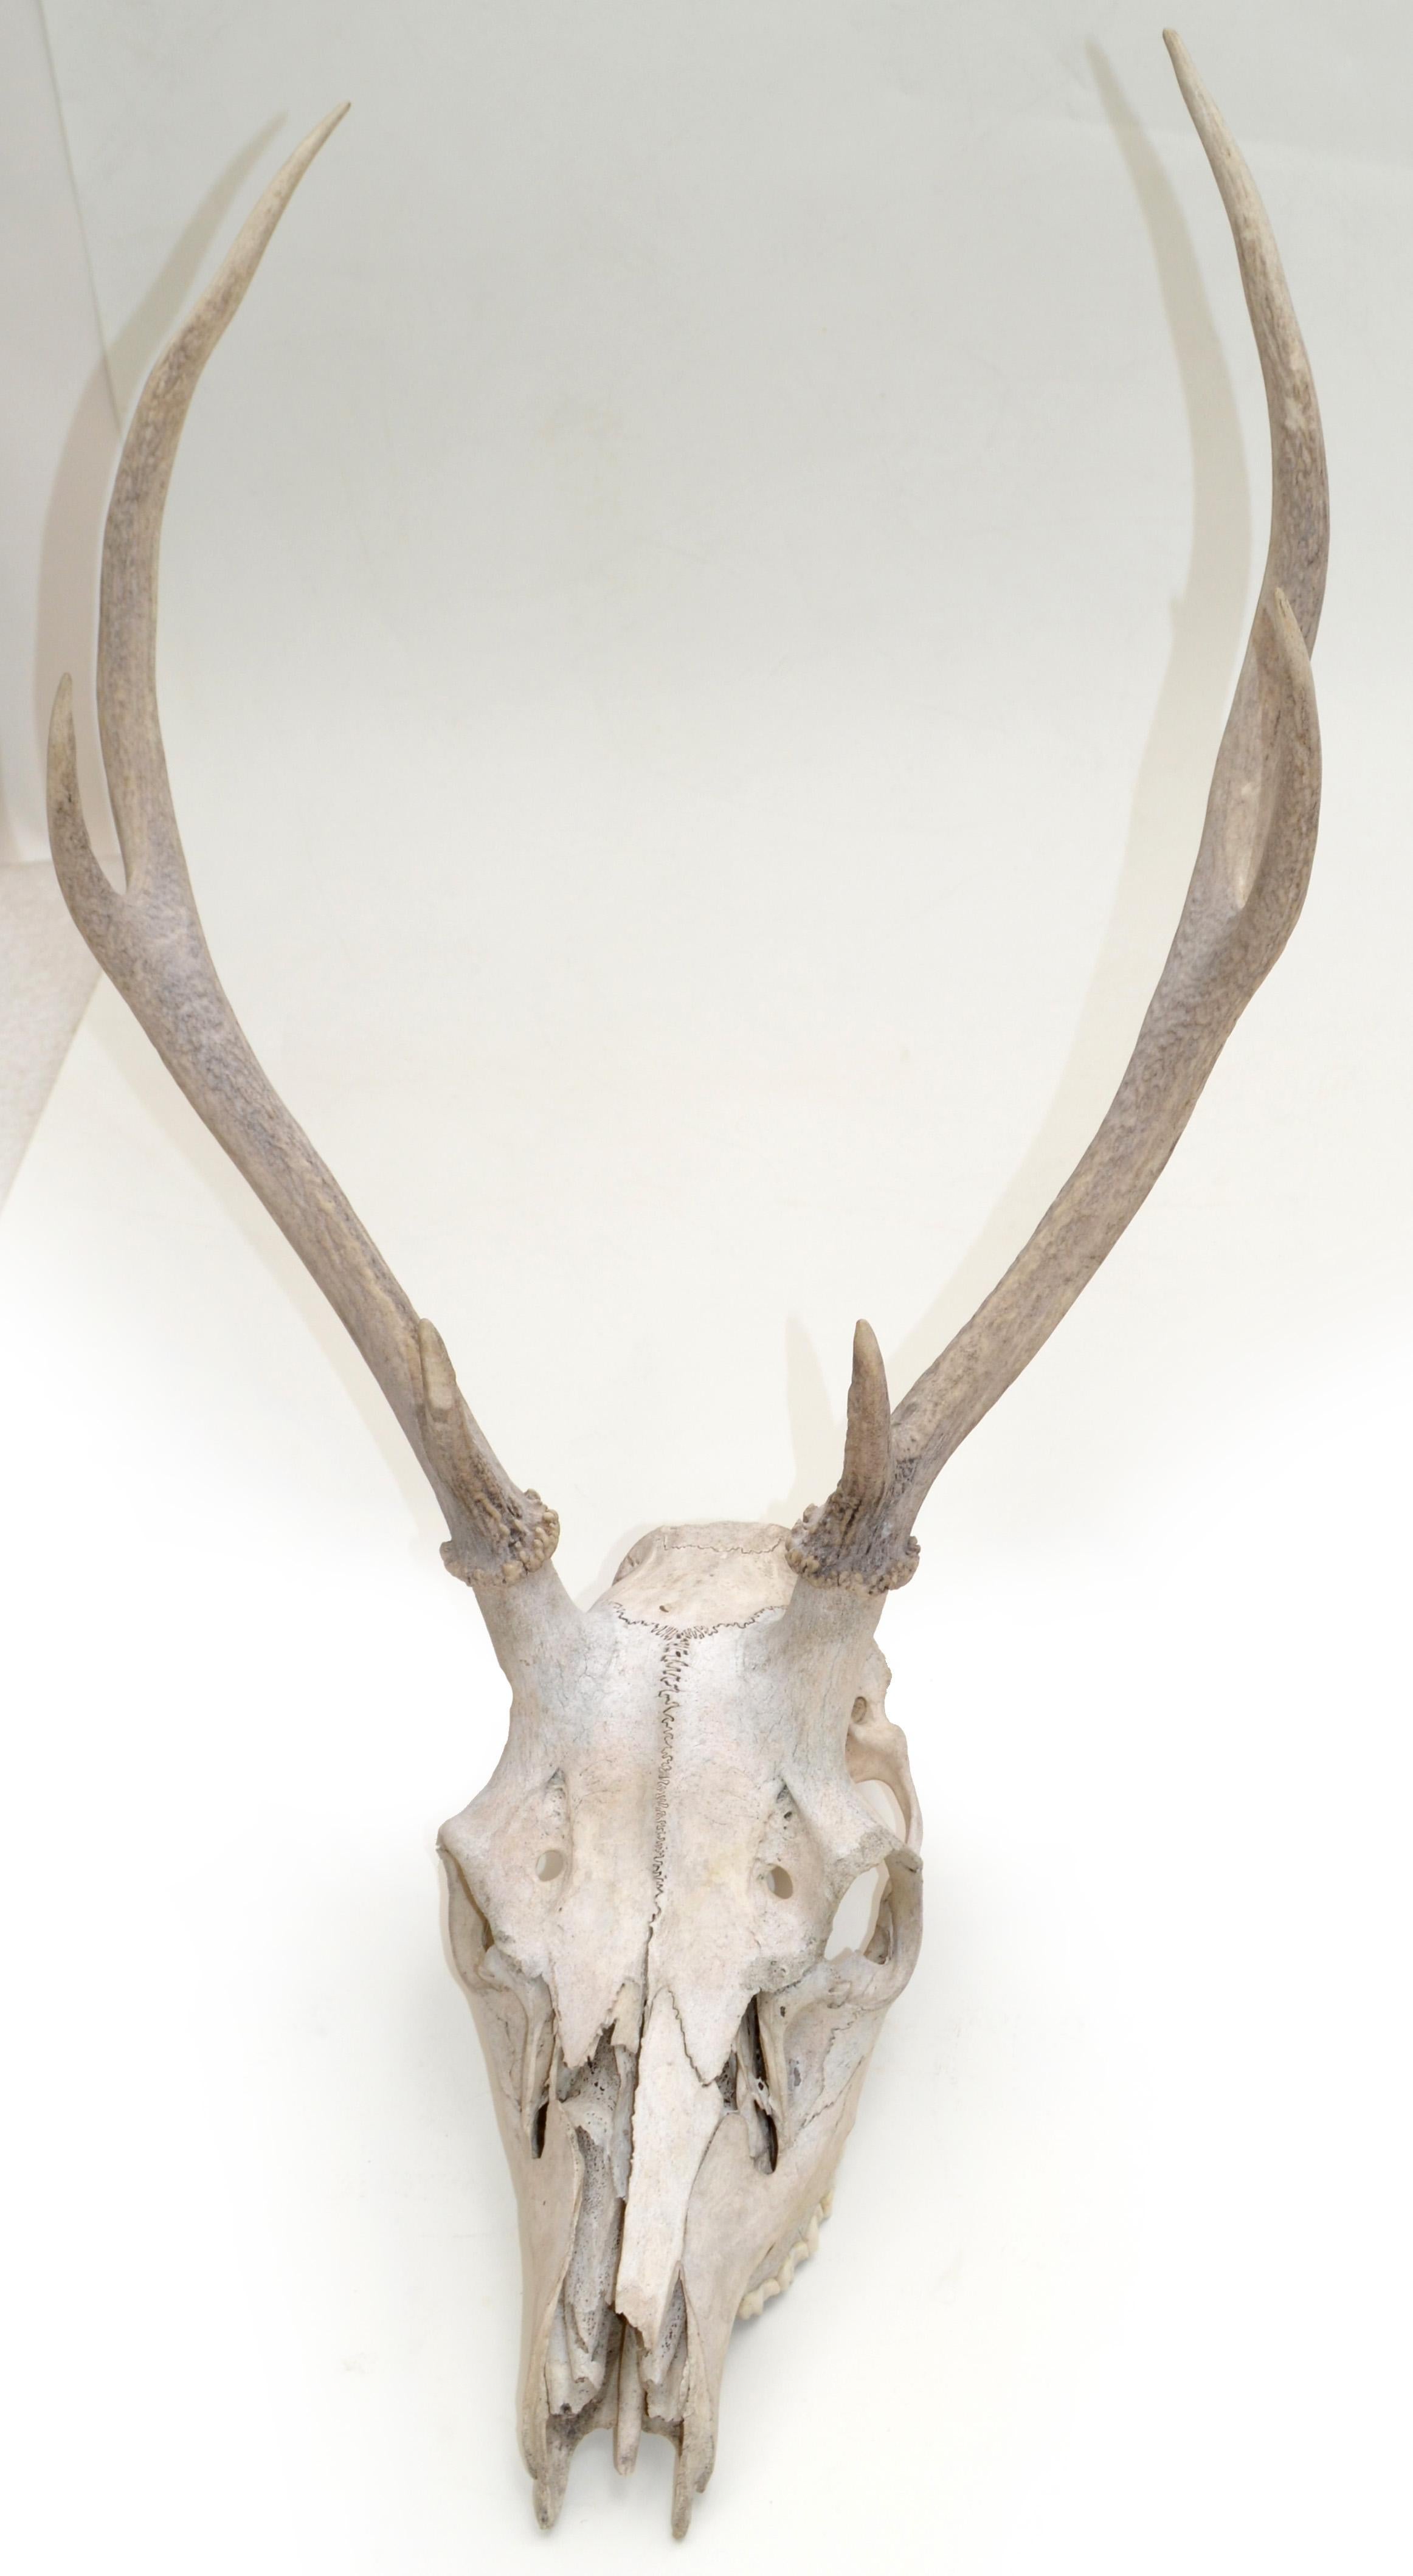 Great piece all original forrest Deer antlers, horns.
Unknown Artist.